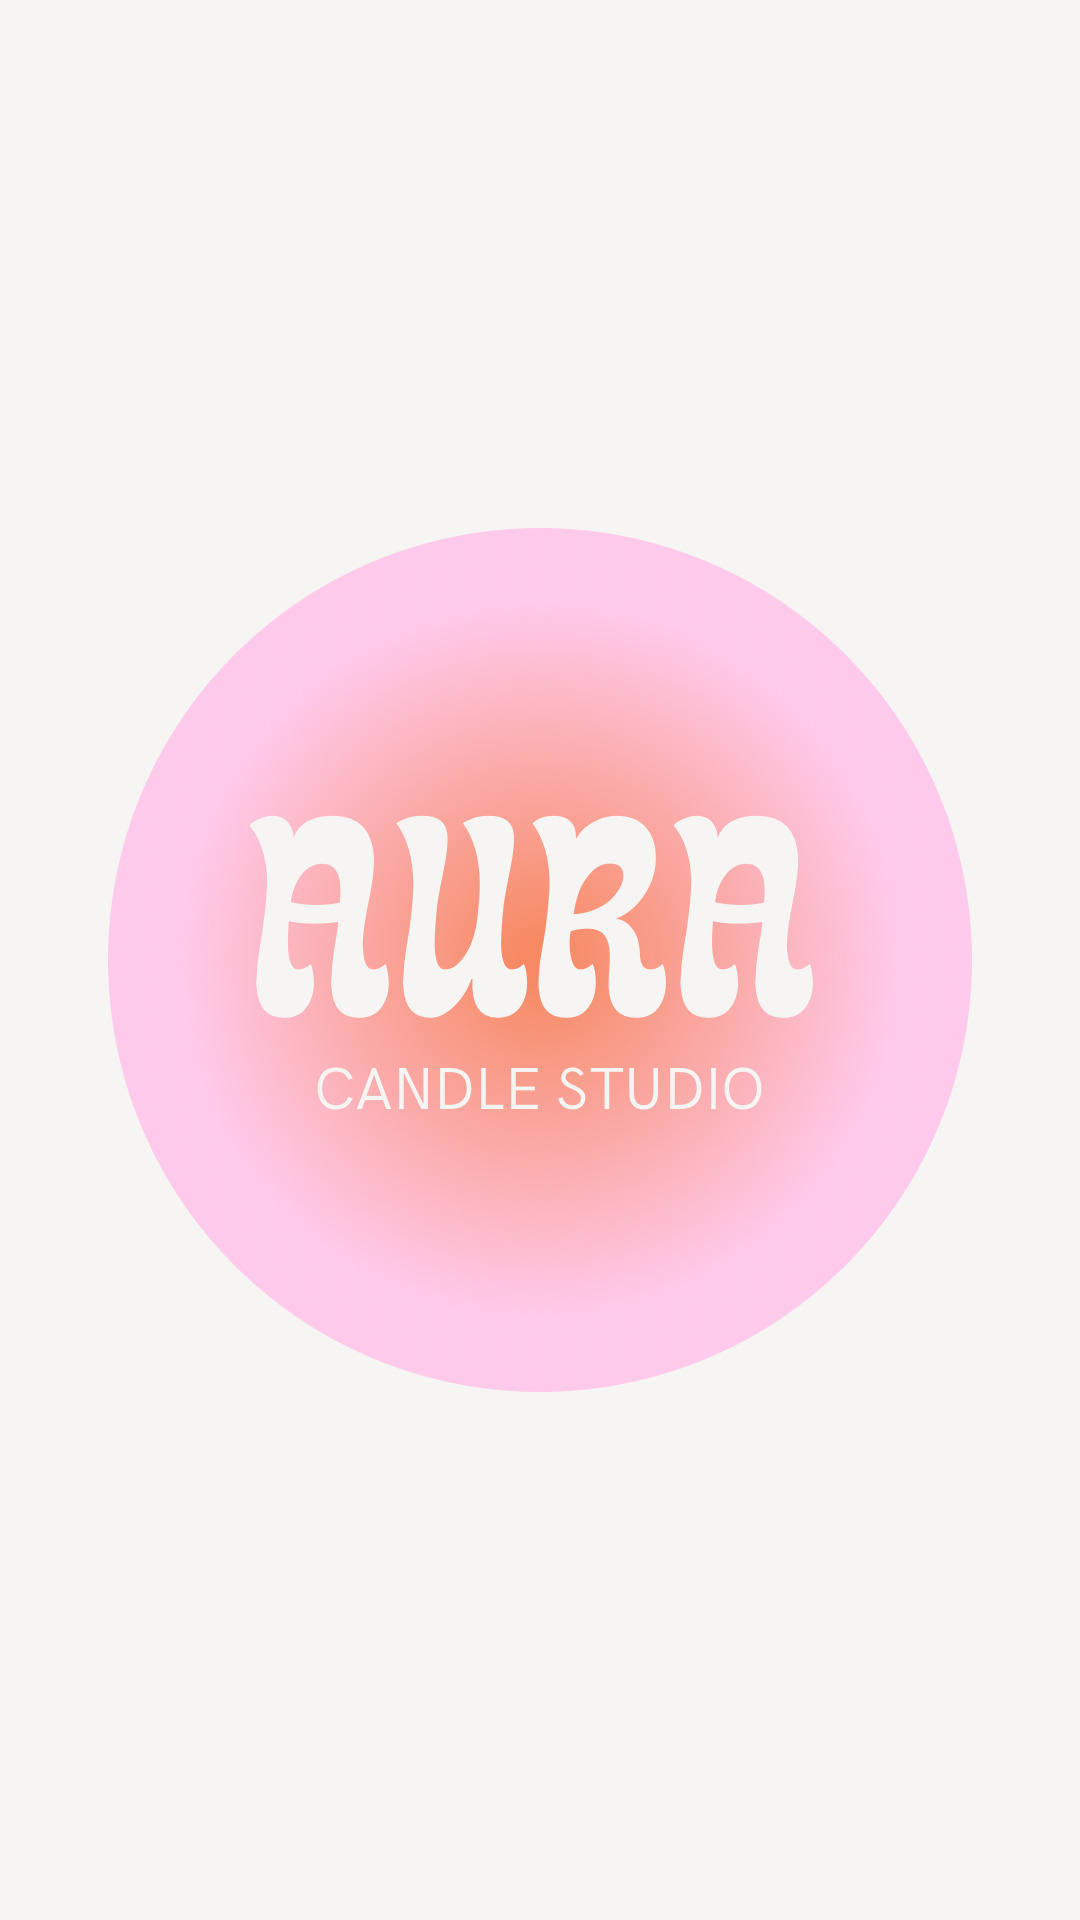 Aura Candle Studio